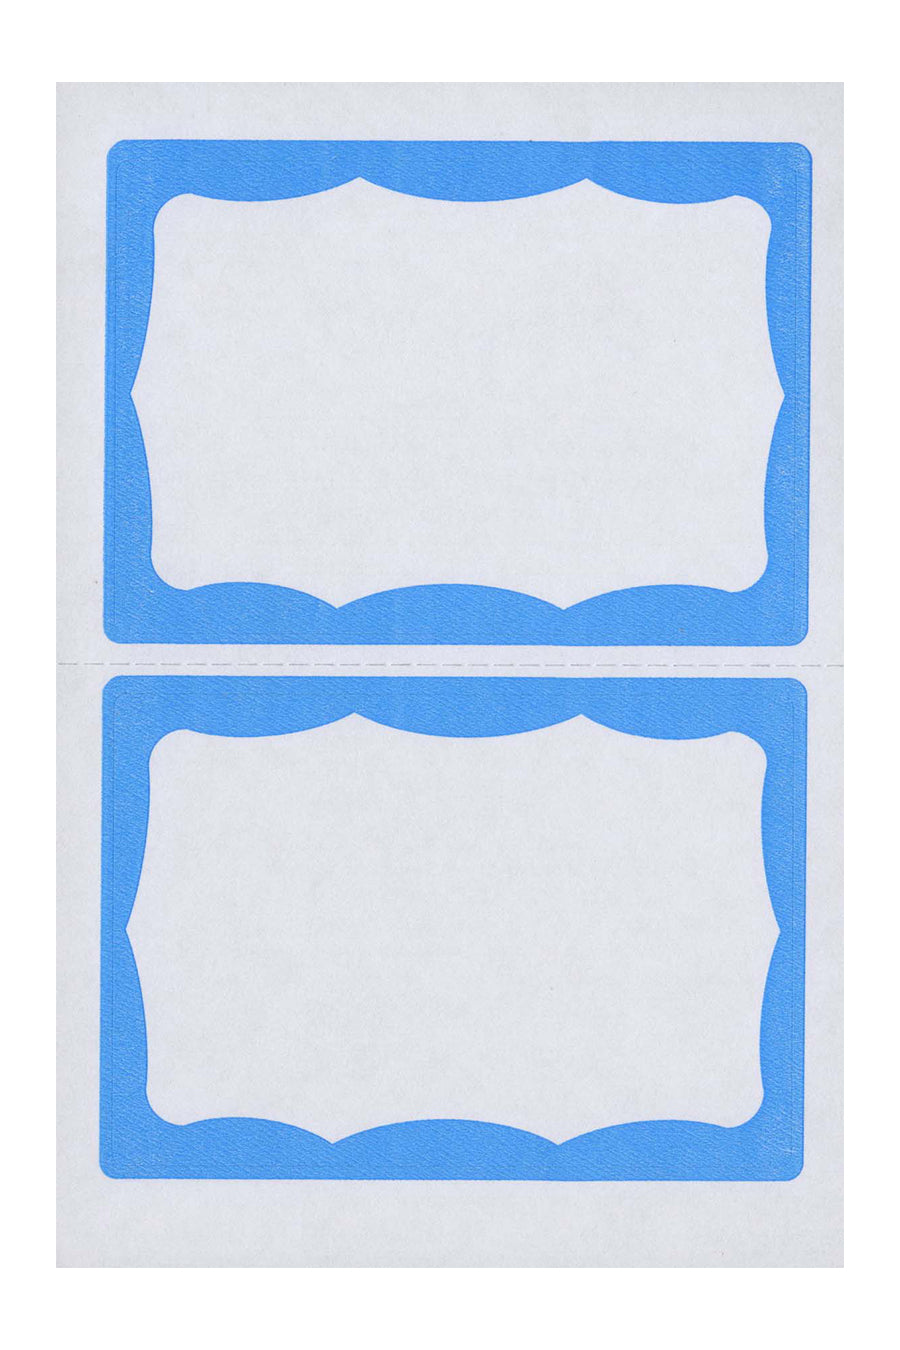 Blue Border Name Badges, 2-11/32" x 3-3/8", 2/Sheet, 100/Bx